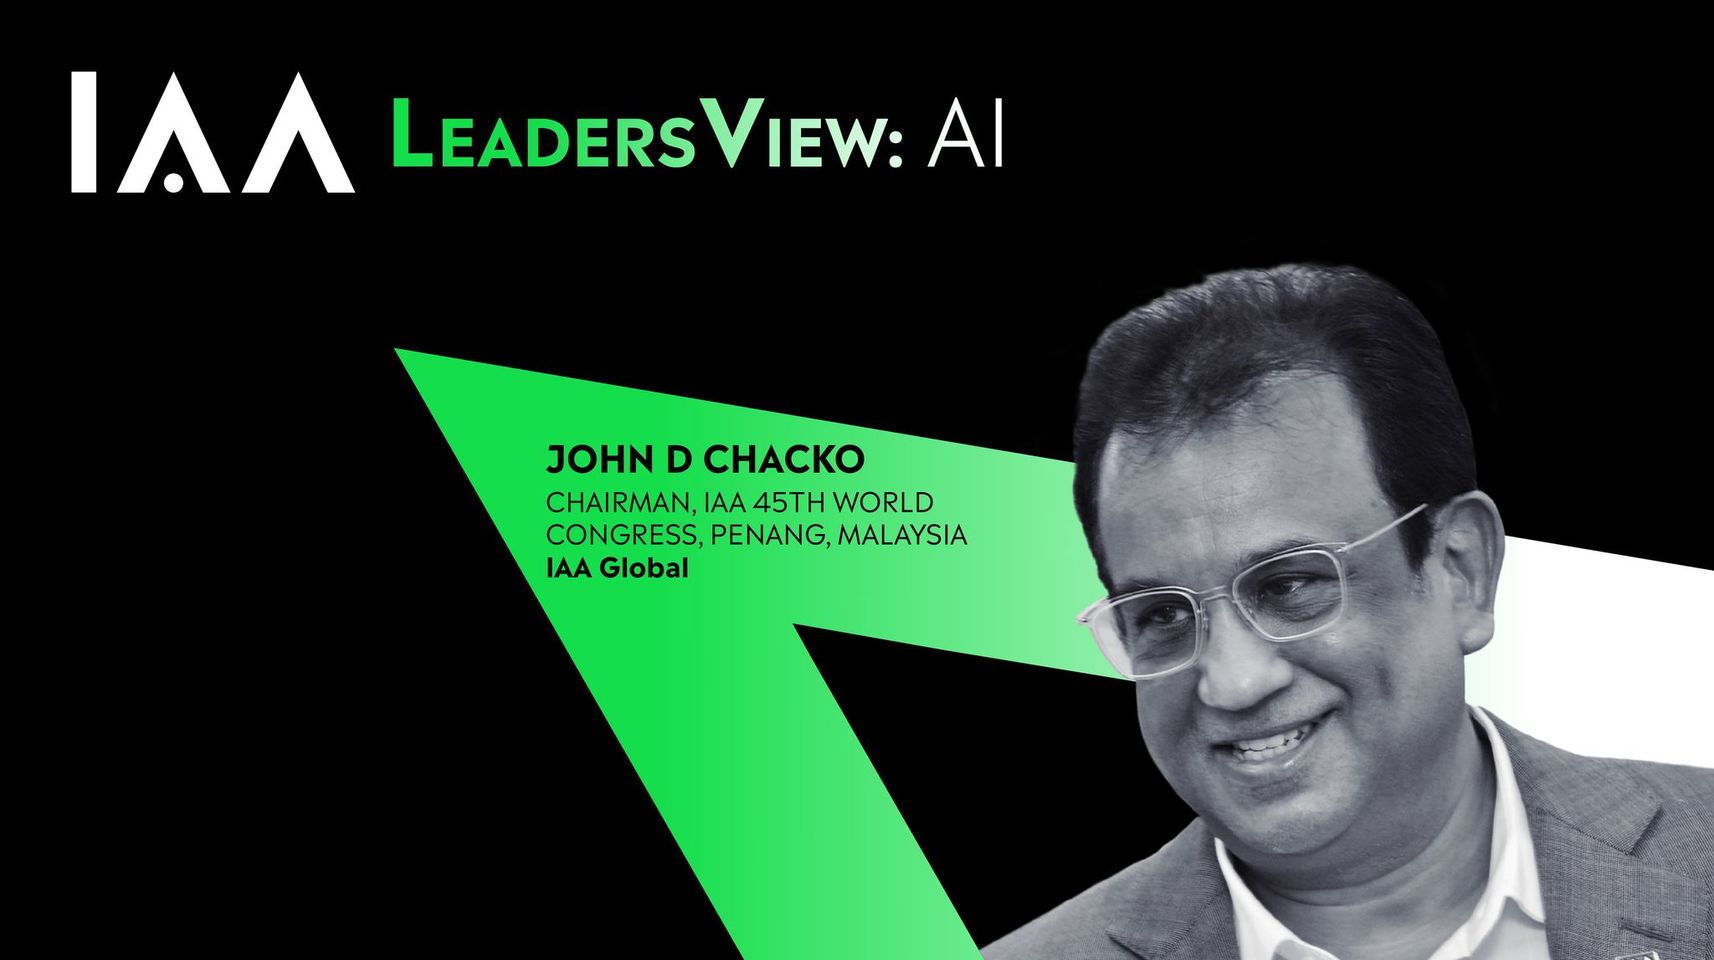 IAA第45屆世界大會主席John D Chacko參與 “IAA Global LeadersView - AI”，向全球推廣分享對 AI 的觀點